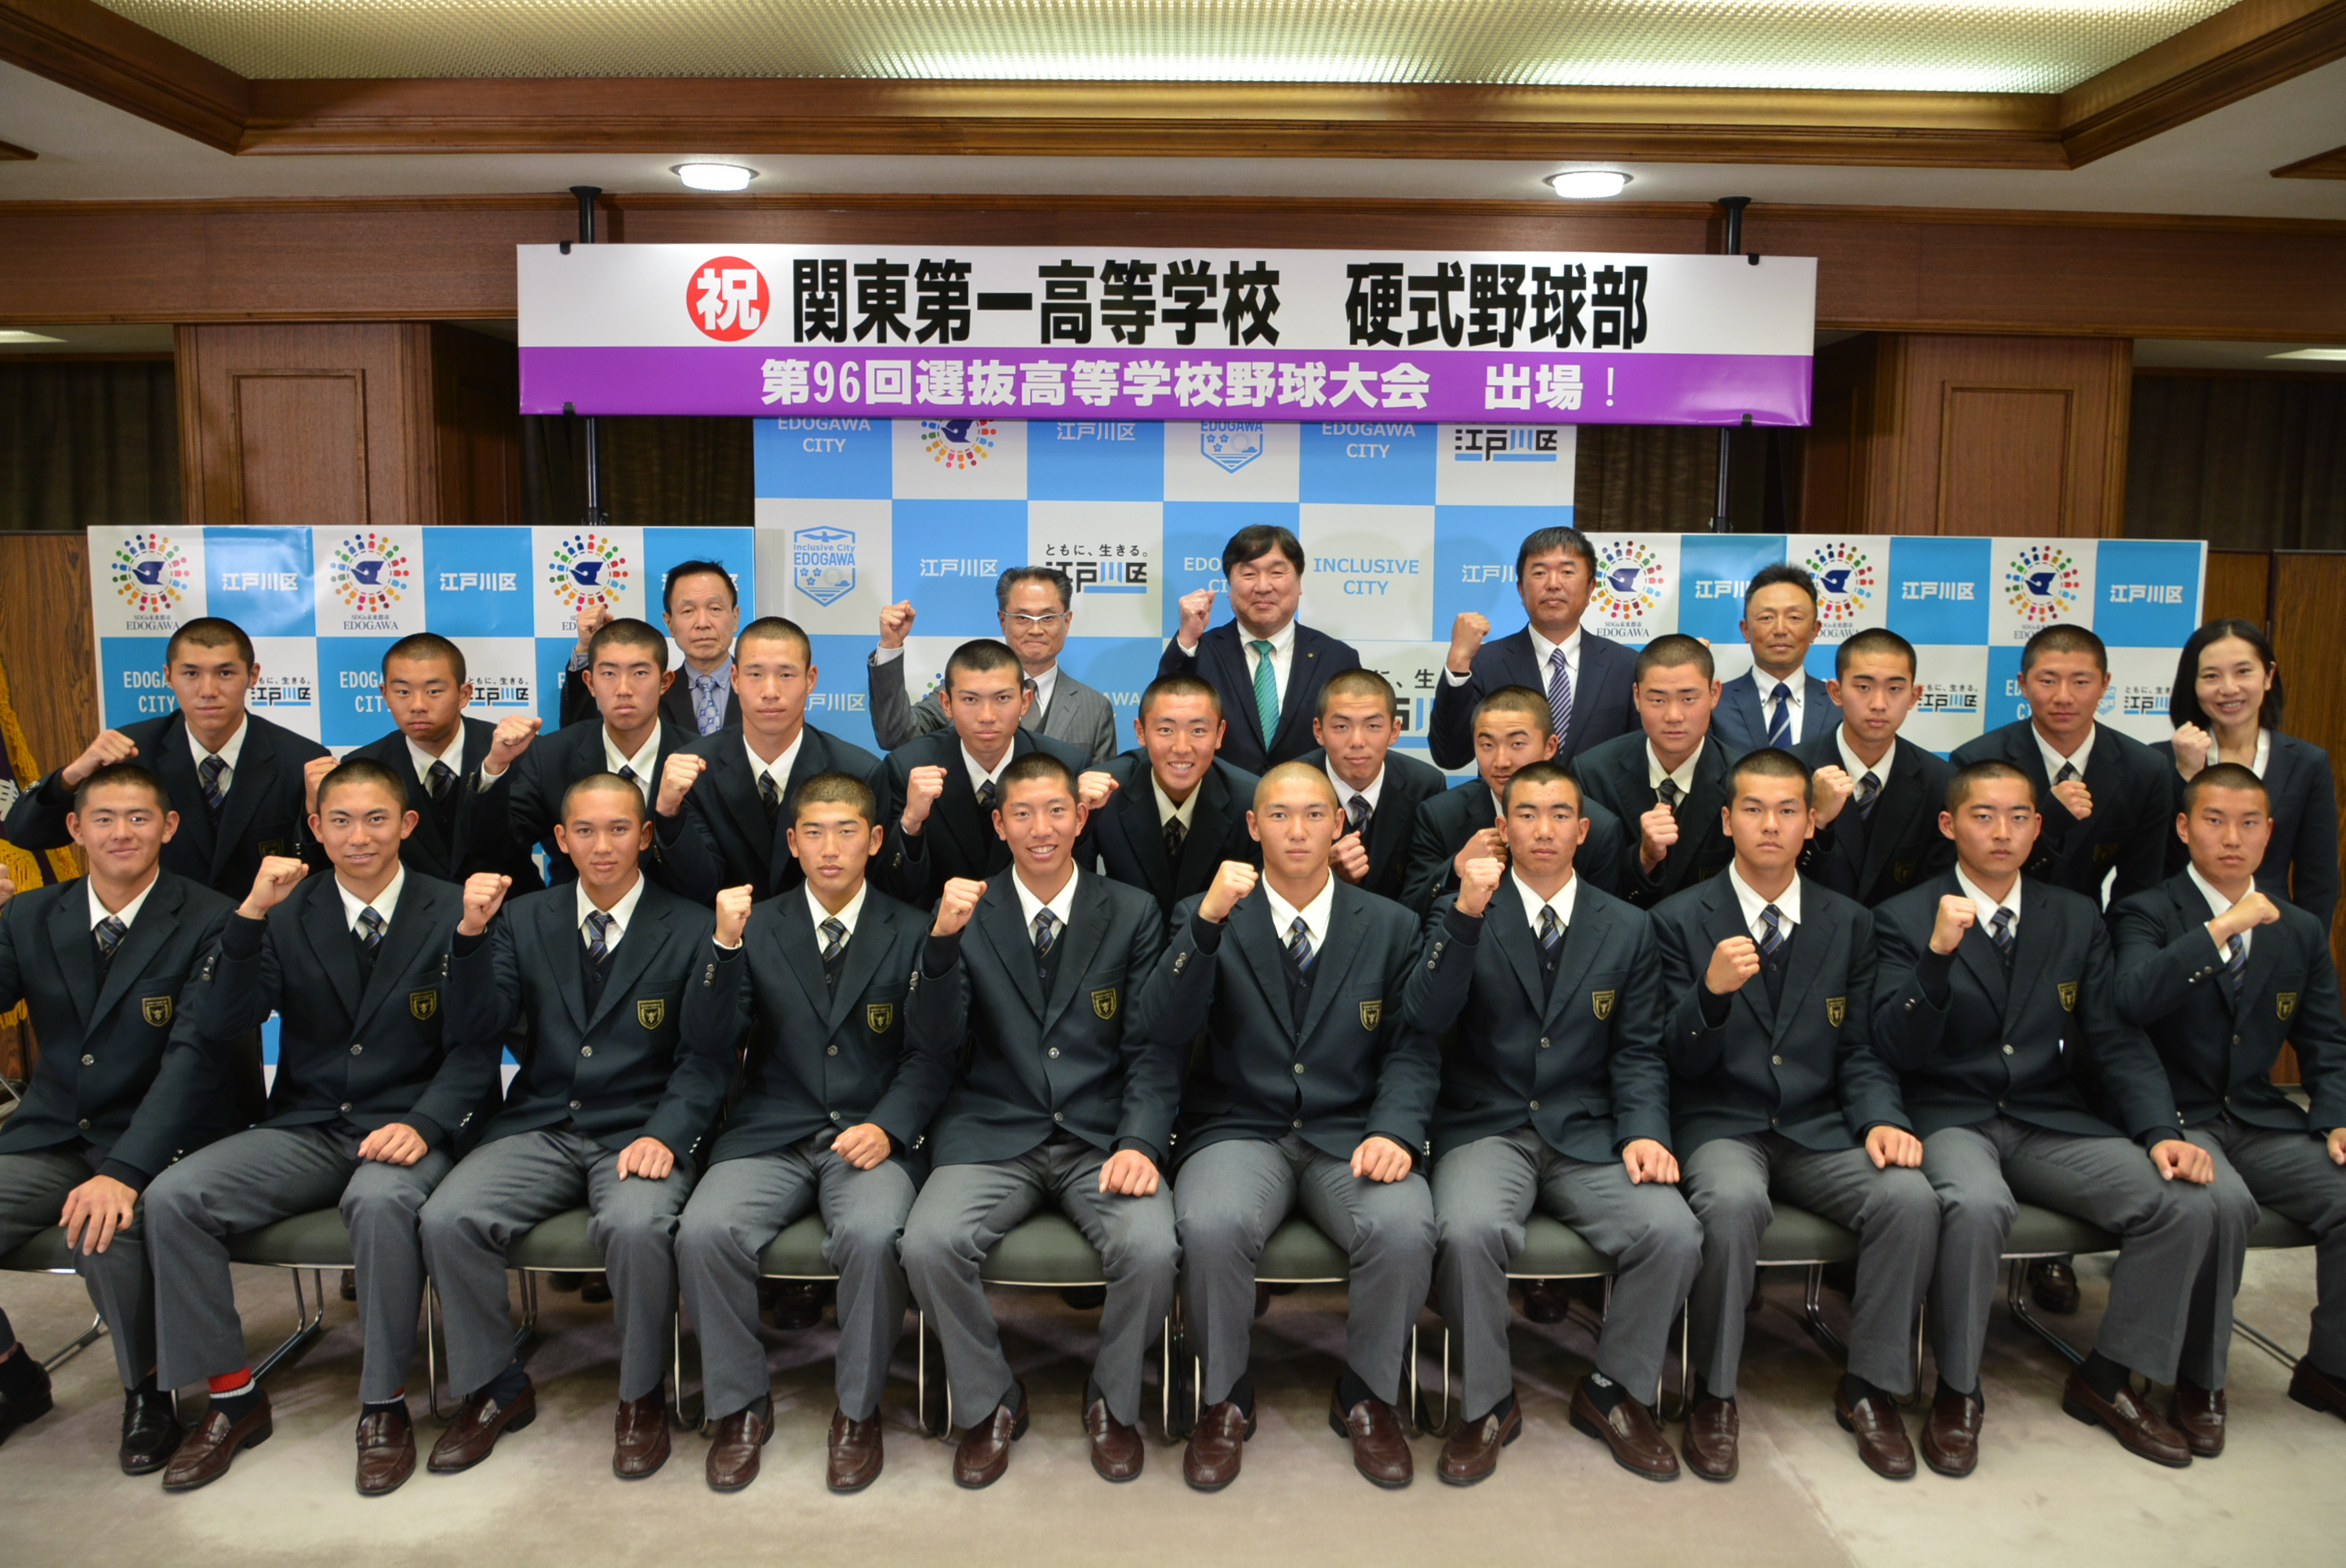 関東第一高等学校野球部の生徒、監督、関係者の方々と区長の集合写真